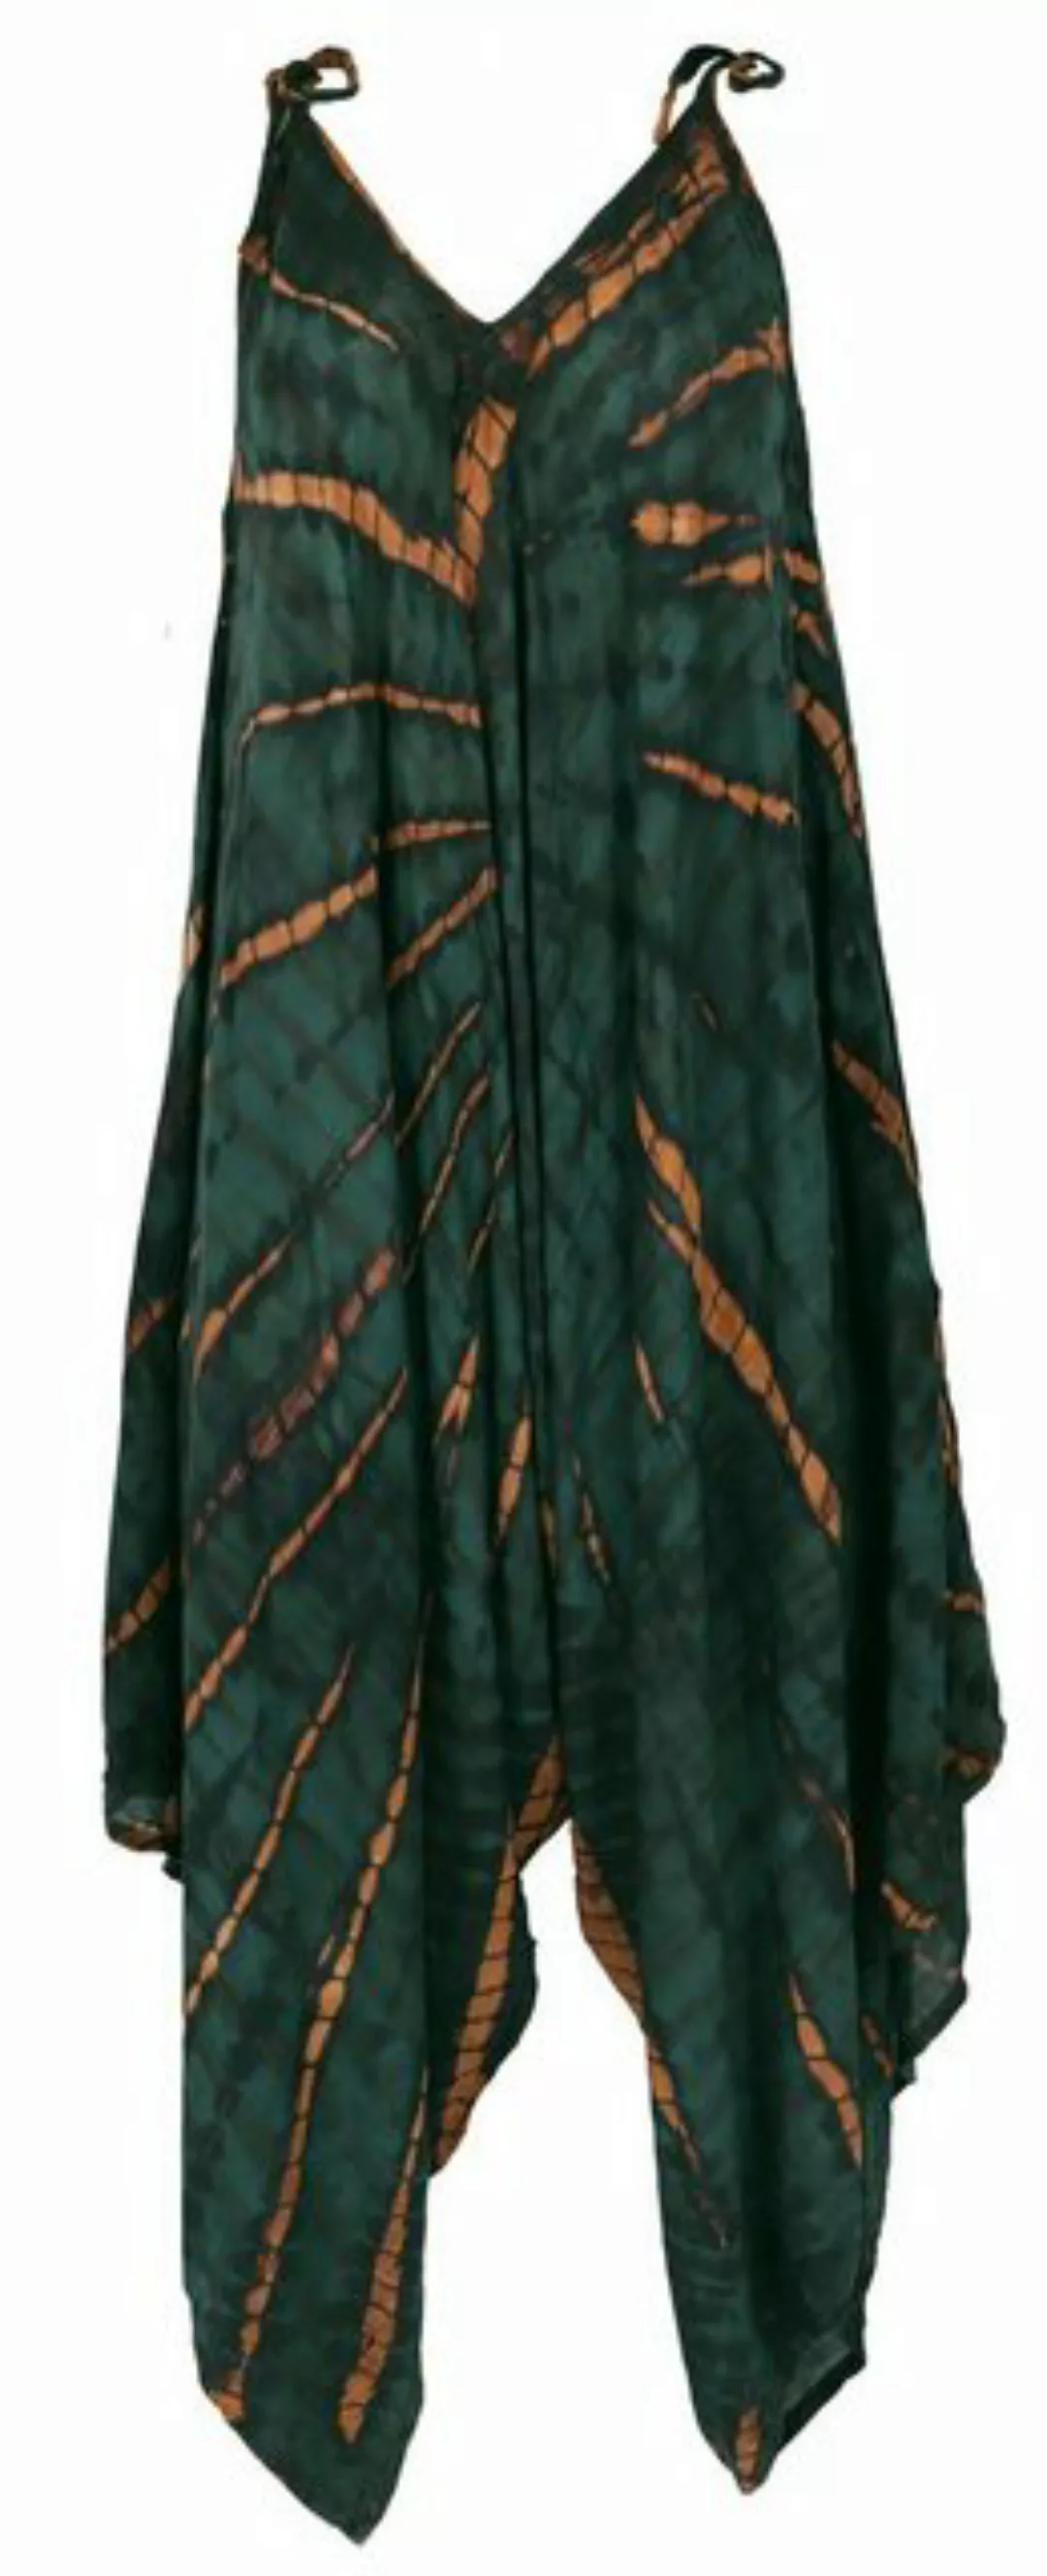 Guru-Shop Relaxhose Boho Batik Jumpsuit, Sommer Overall, Hosenkleid.. alter günstig online kaufen